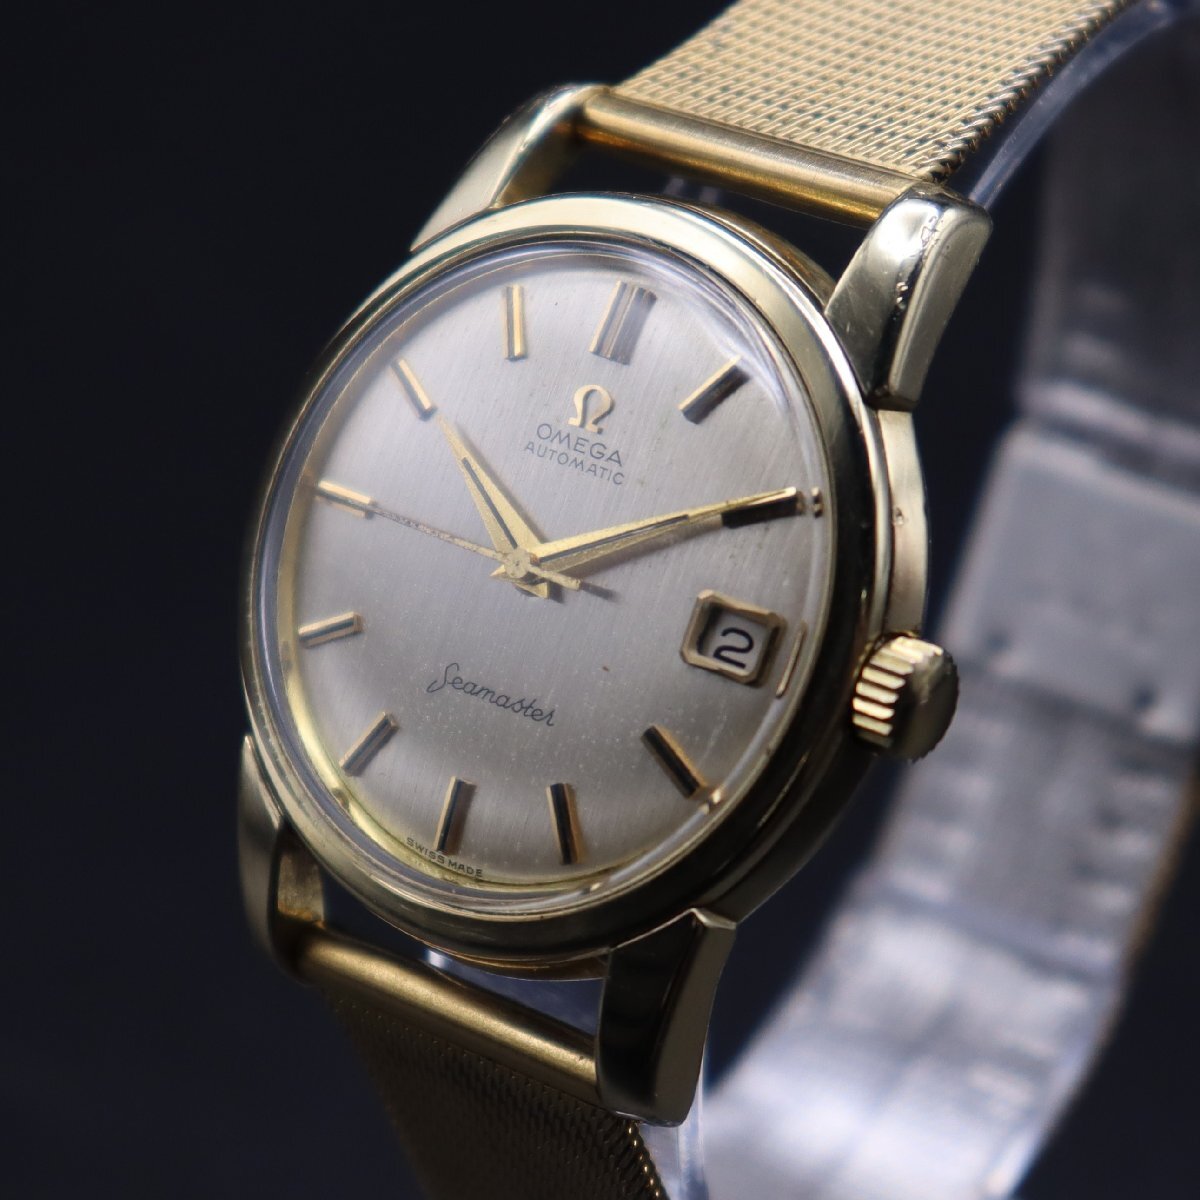 OMEGA Seamaster オメガ シーマスター Ref.166.009 Cal.562 自動巻き 下がりS 1960年代 デイト スイス製 アンティーク メンズ腕時計の画像1